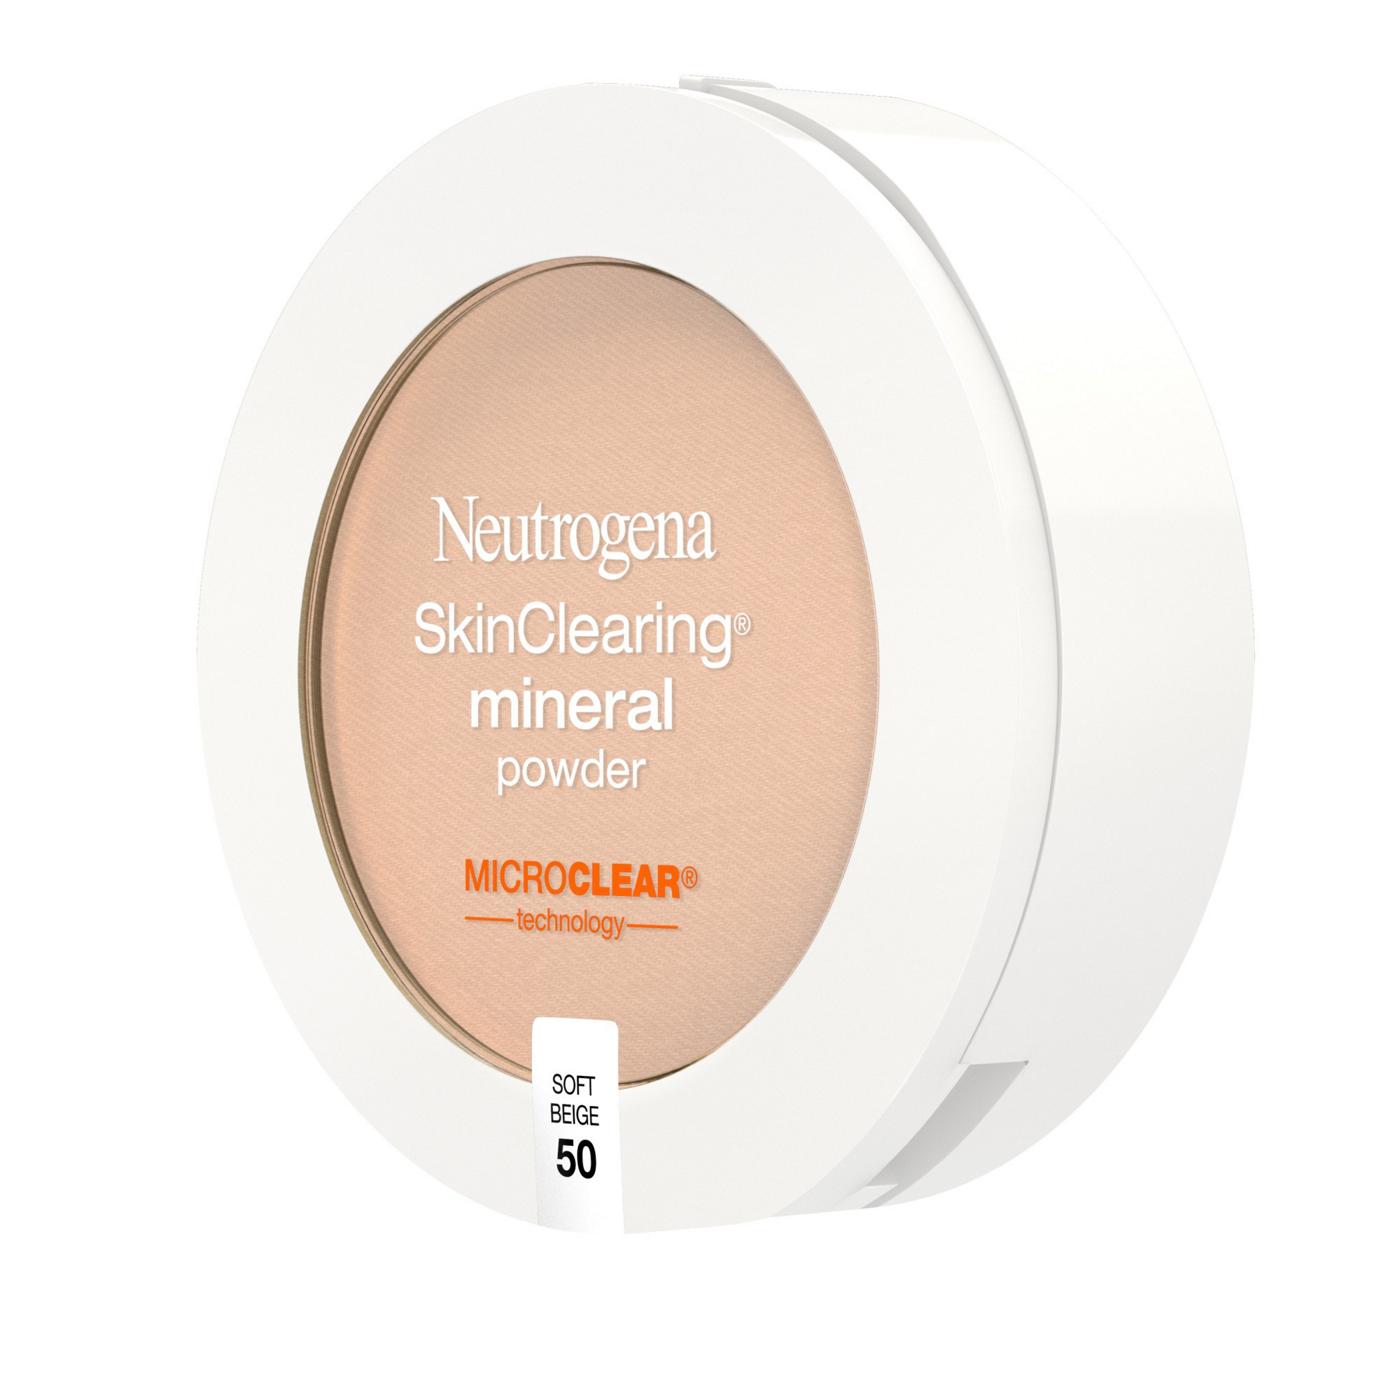 Neutrogena Skinclearing Mineral Powder 50 Soft Beige; image 3 of 5